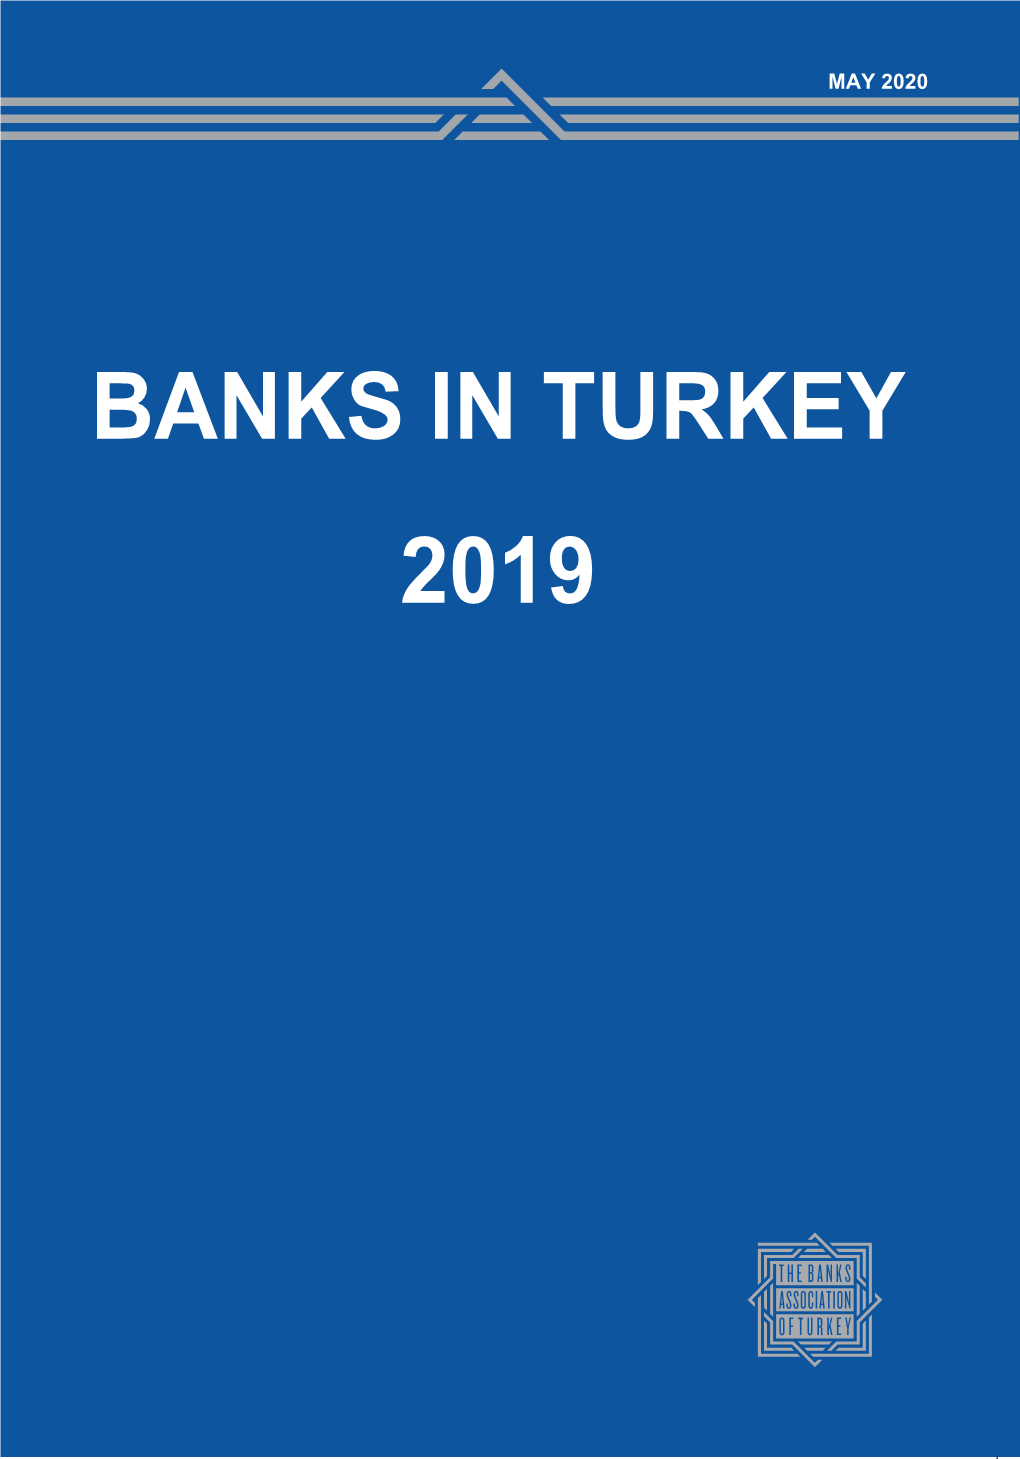 Banks in Turkey 2019